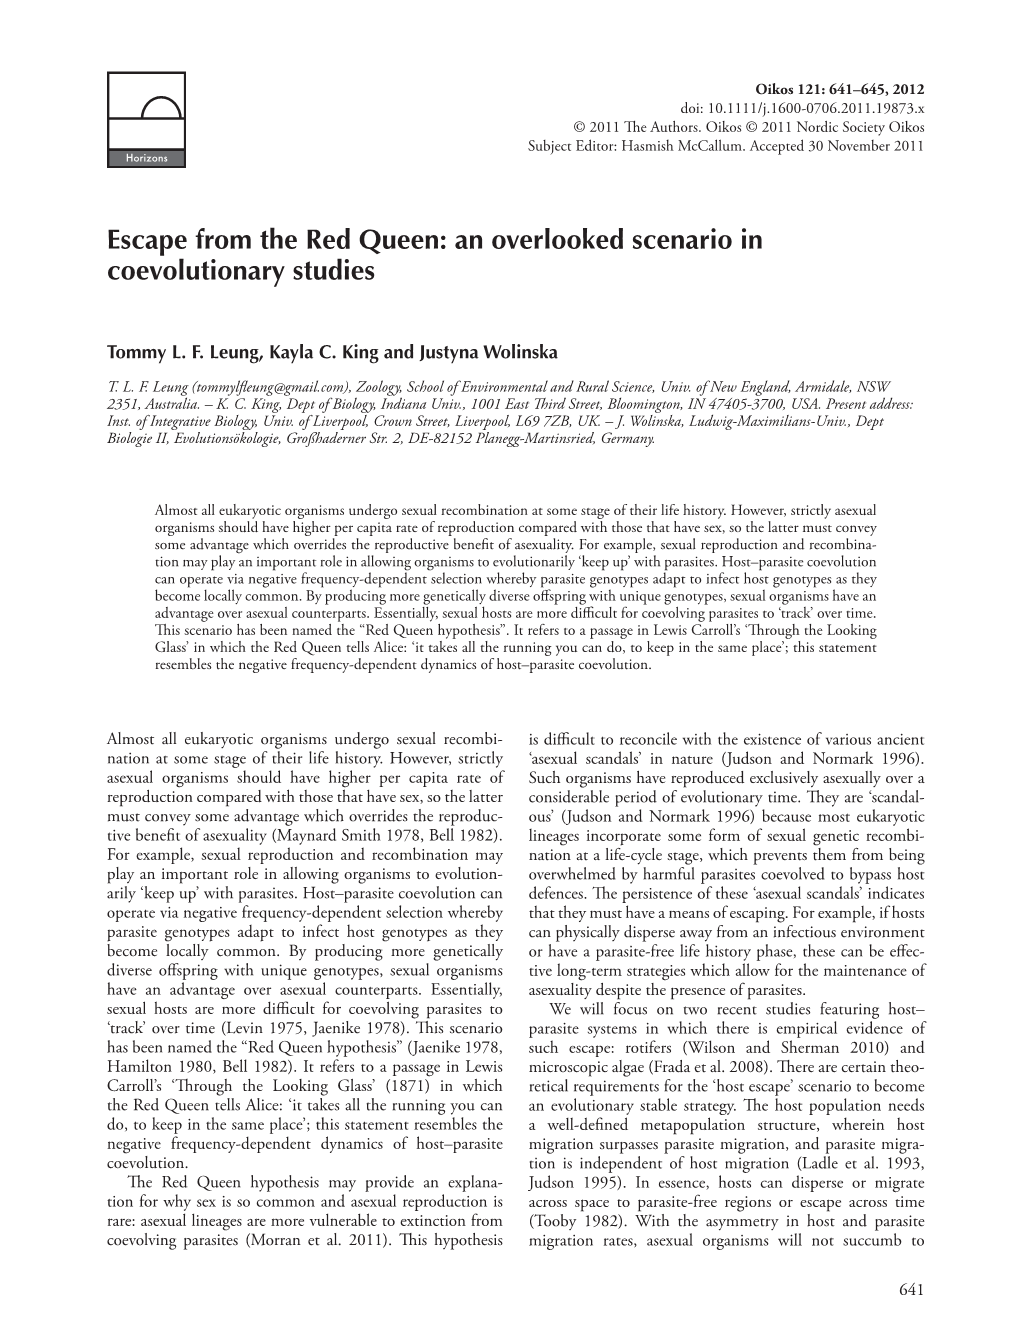 Escape from the Red Queen: an Overlooked Scenario in Coevolutionary Studies